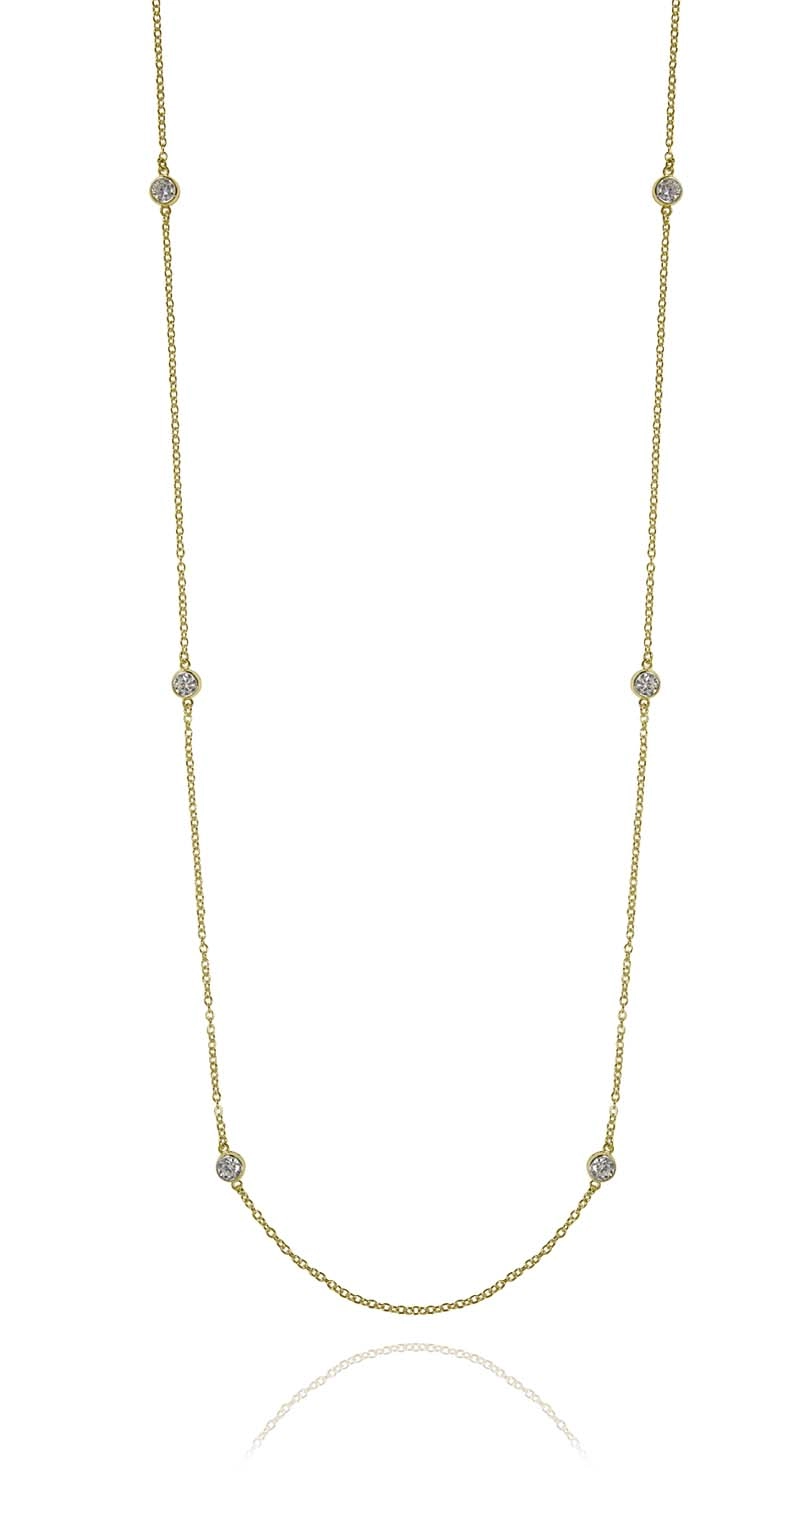 Cubic Long Chain Necklace Gold -CU Jewellery - Snabb frakt & paketinslagning - Nordicspectra.se